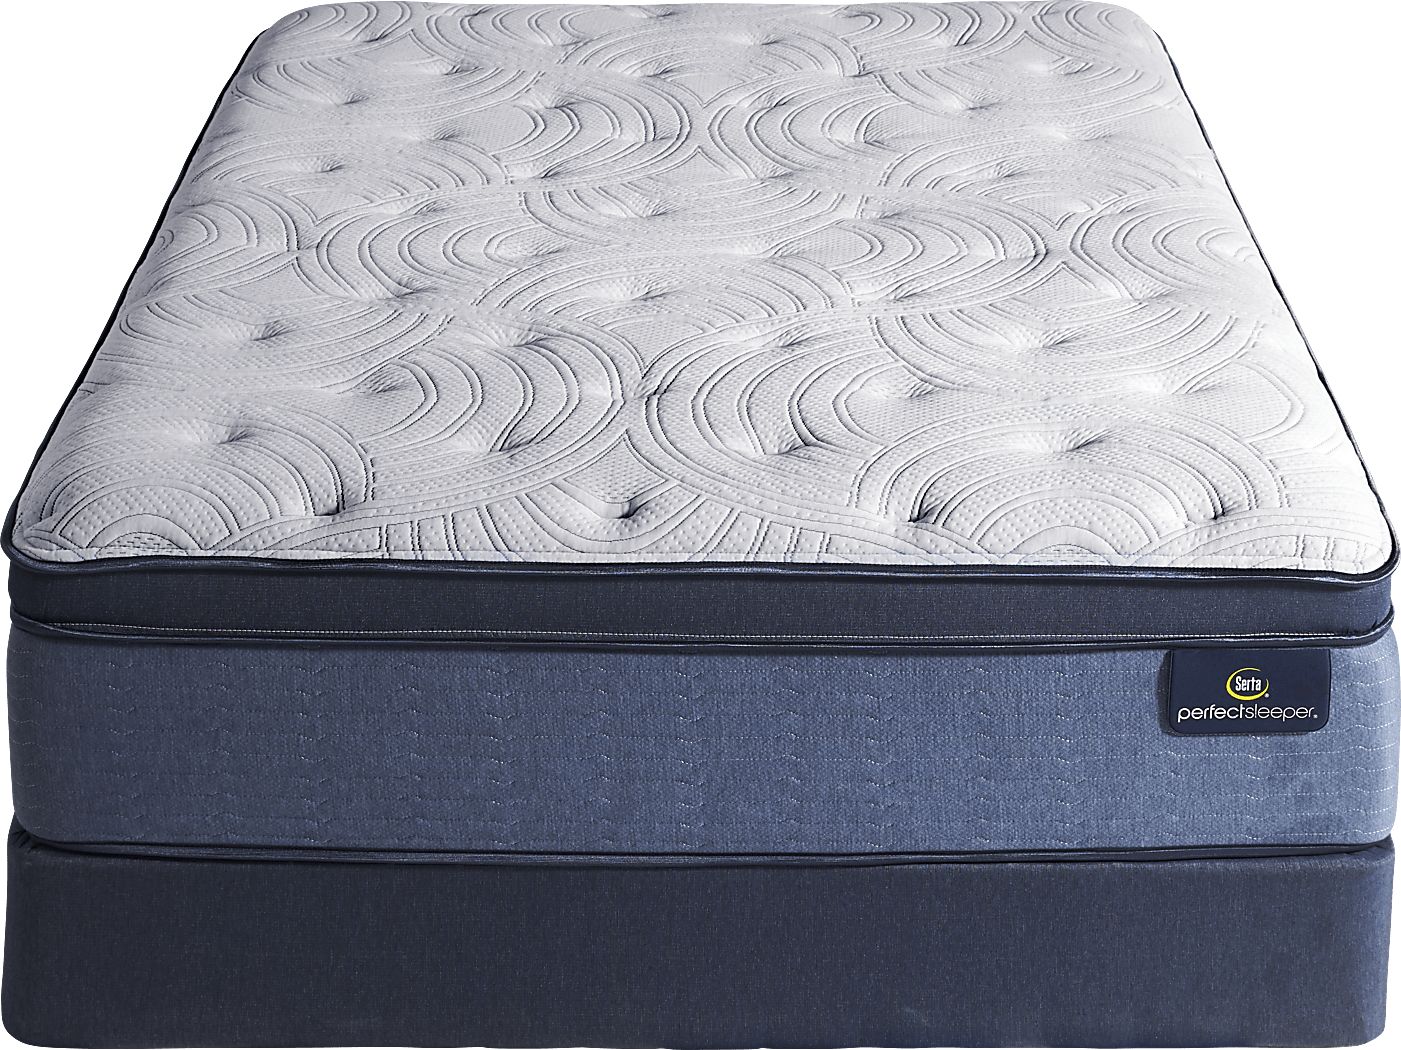 serta perfect sleeper ashbrook eurotop plush mattress